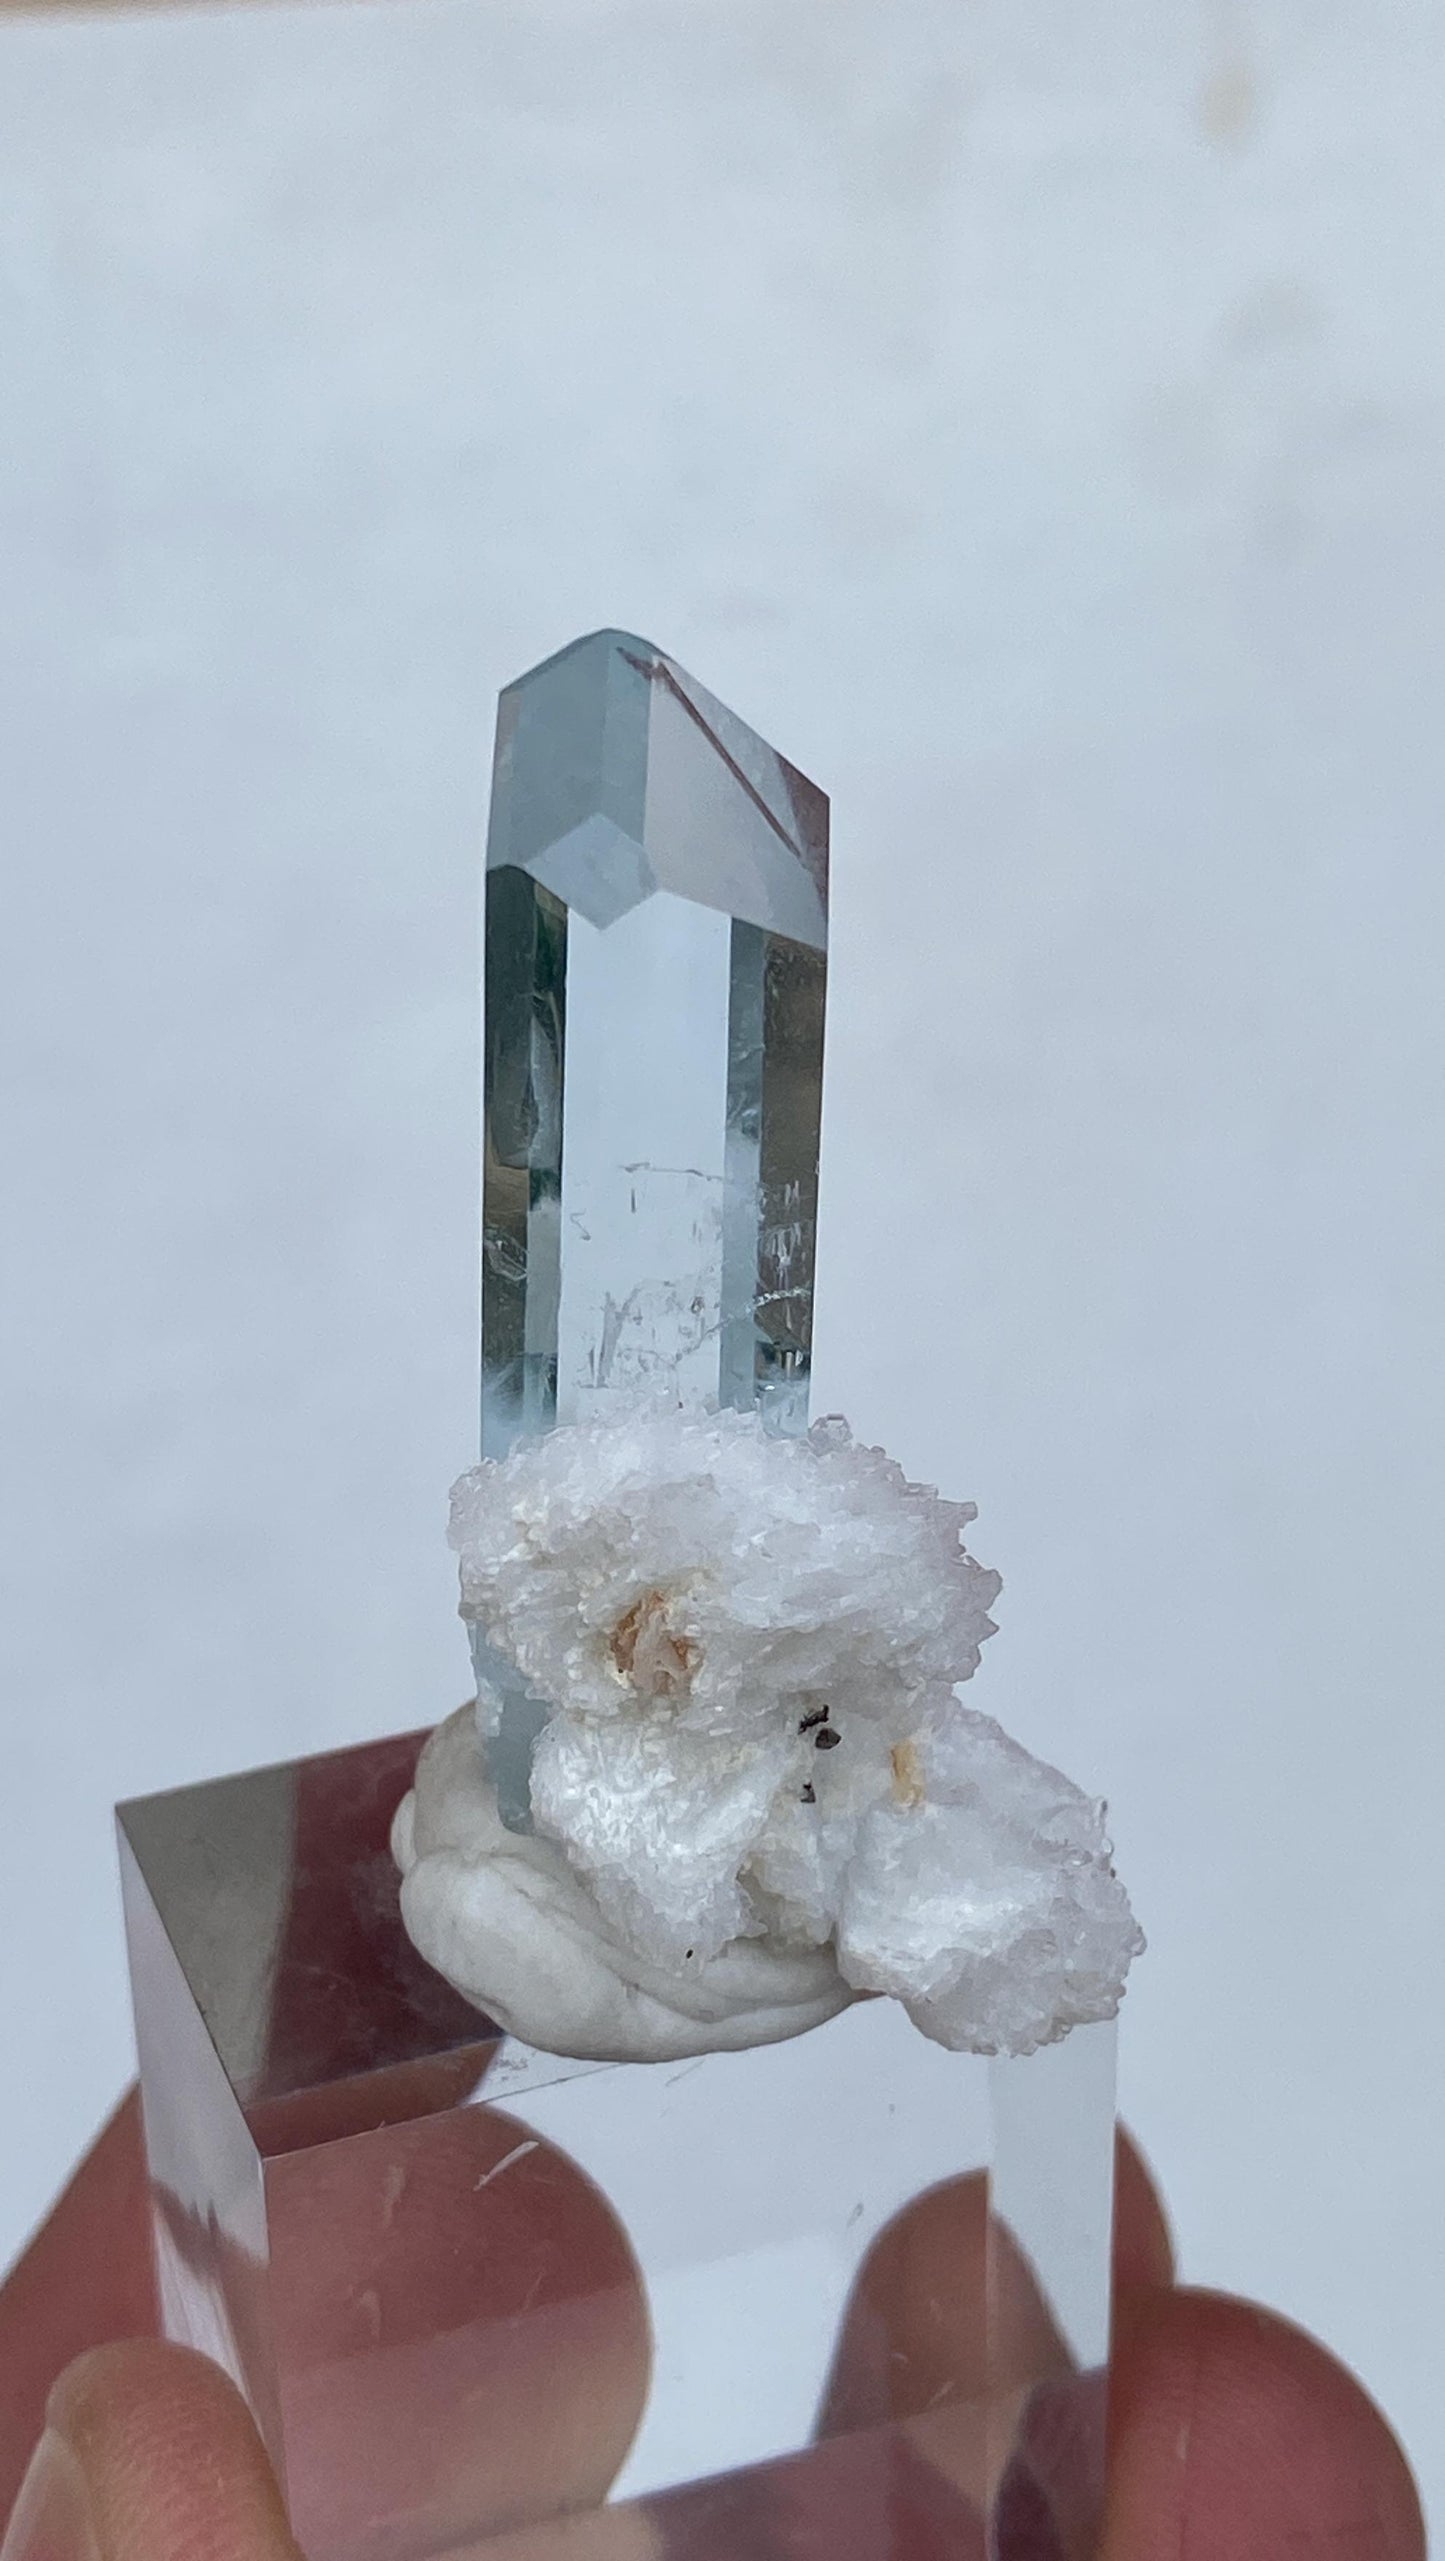 Diamond Cut Aquamarine Crystal with Cleavelandite Matrix | Shigar Valley